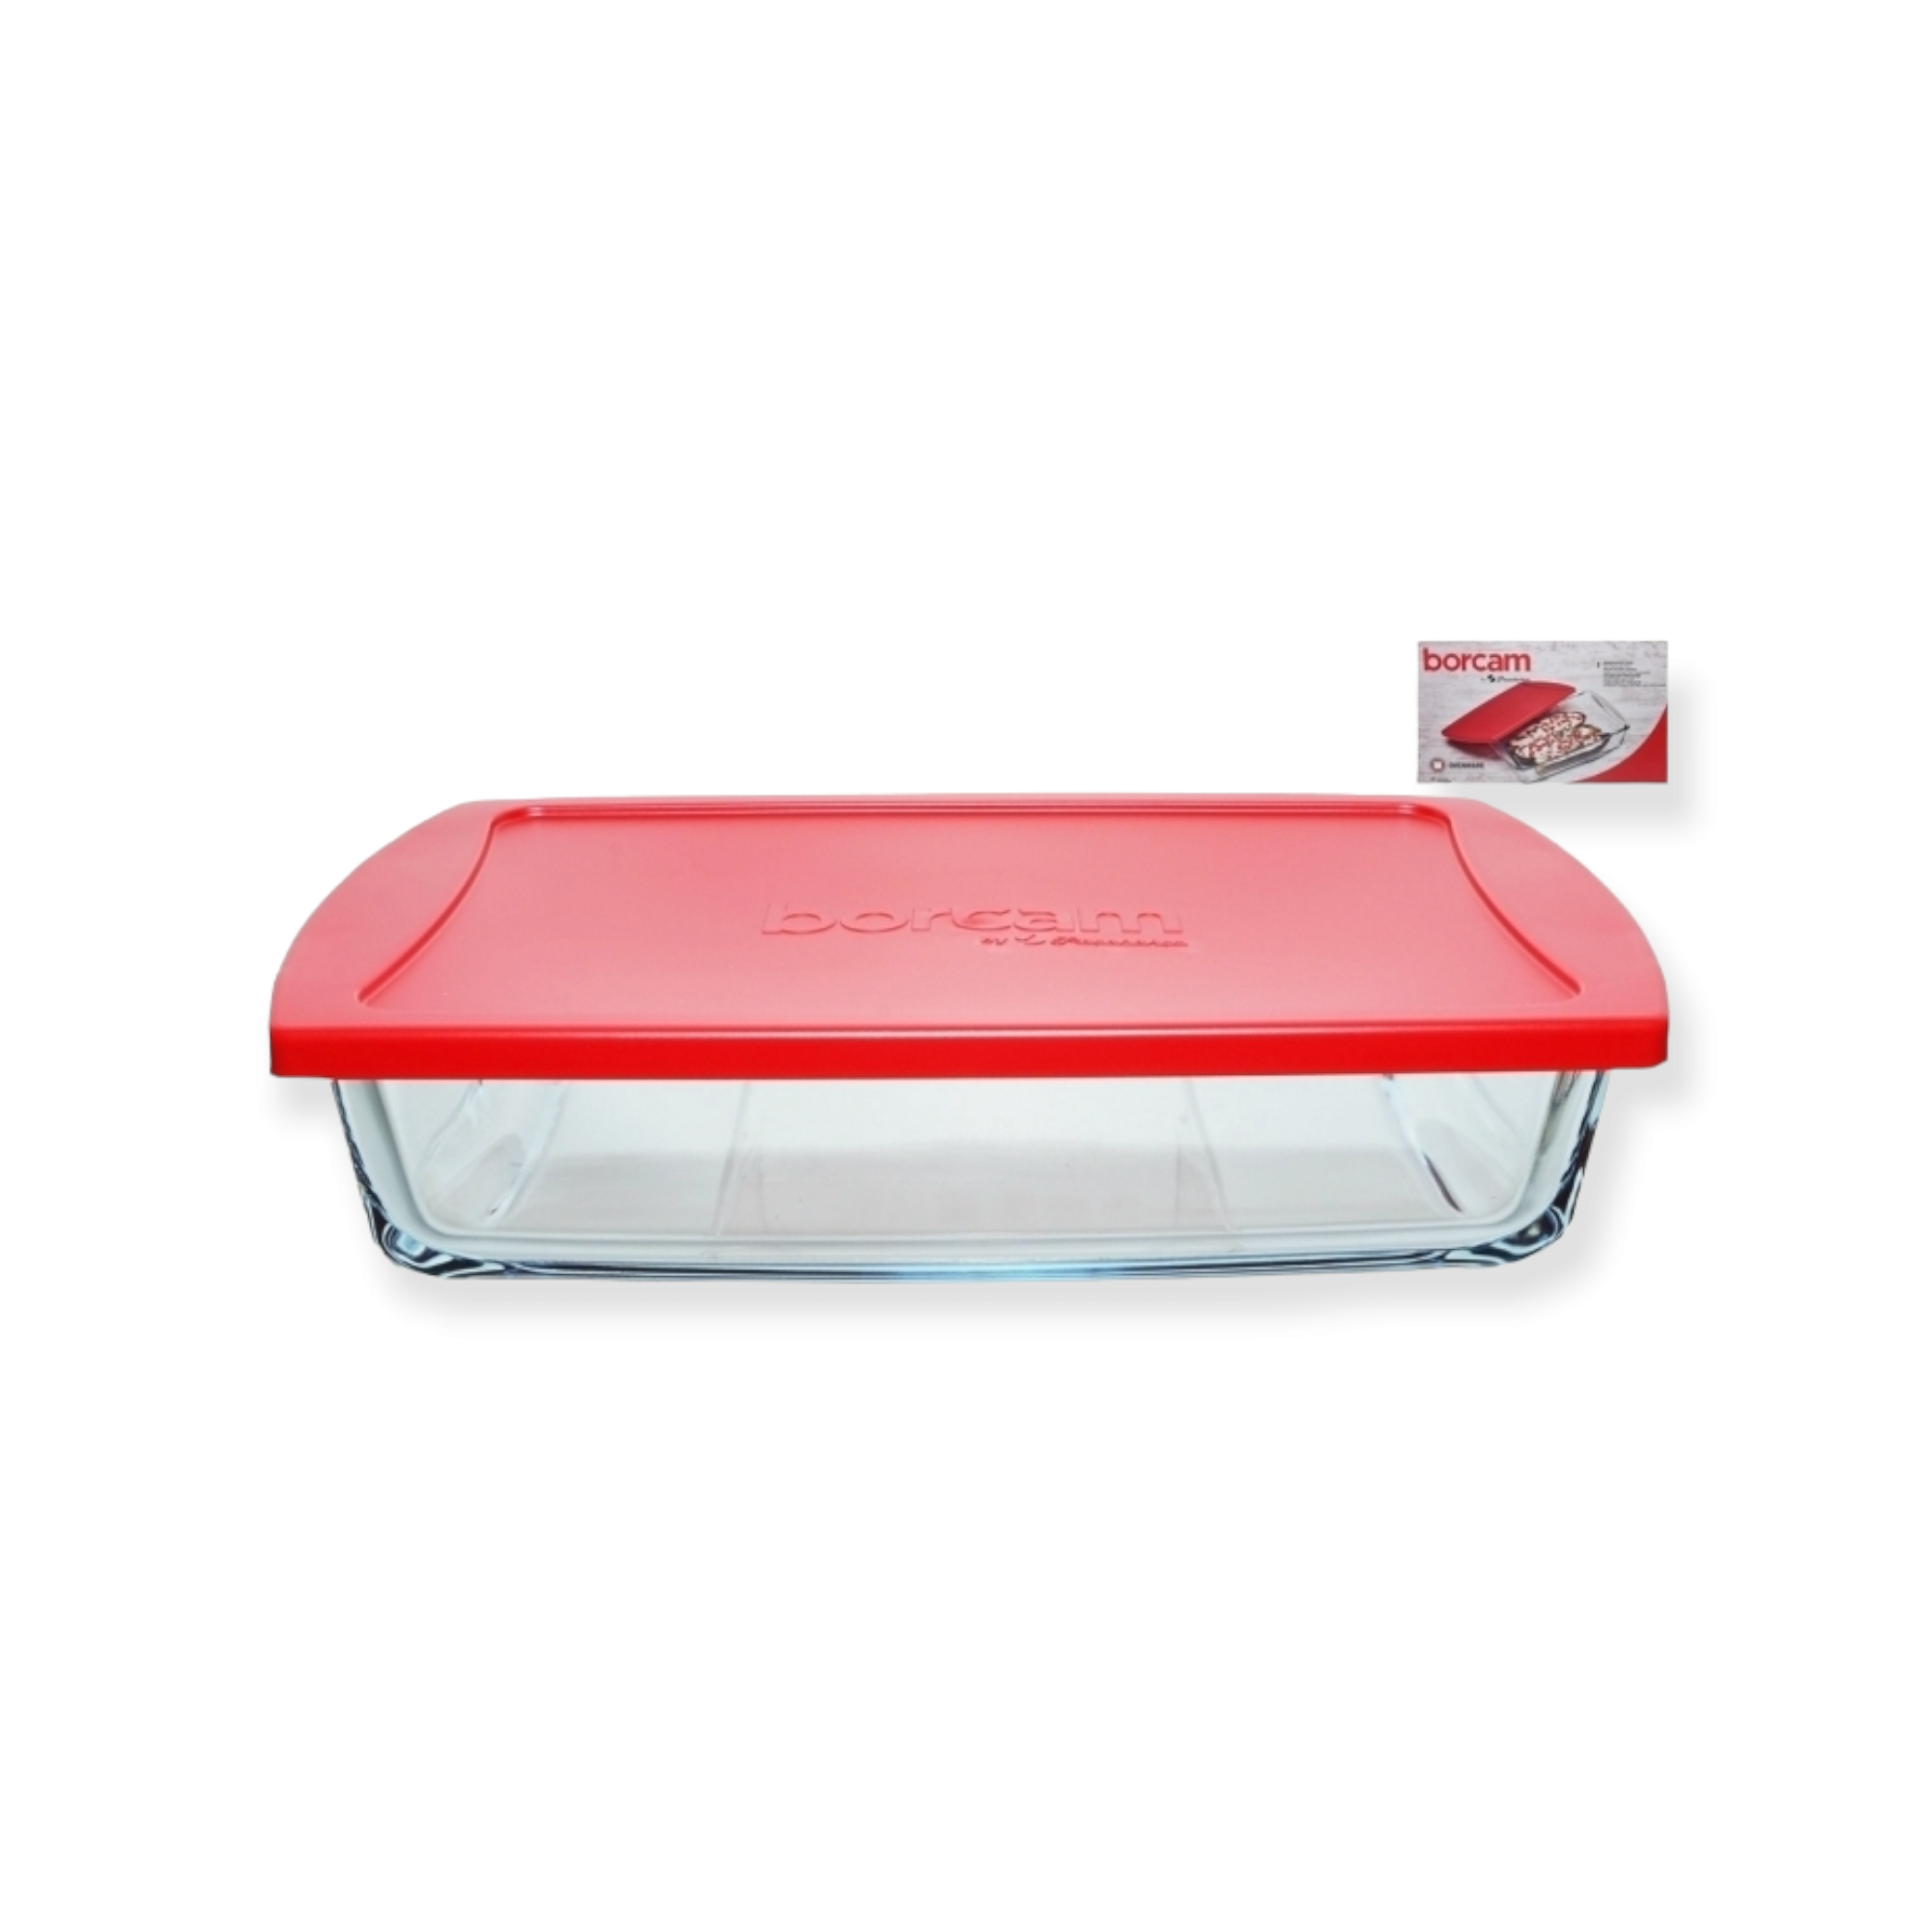 Borcam Glass Serving Dish Tray rectangle Medium 1.32L 23844